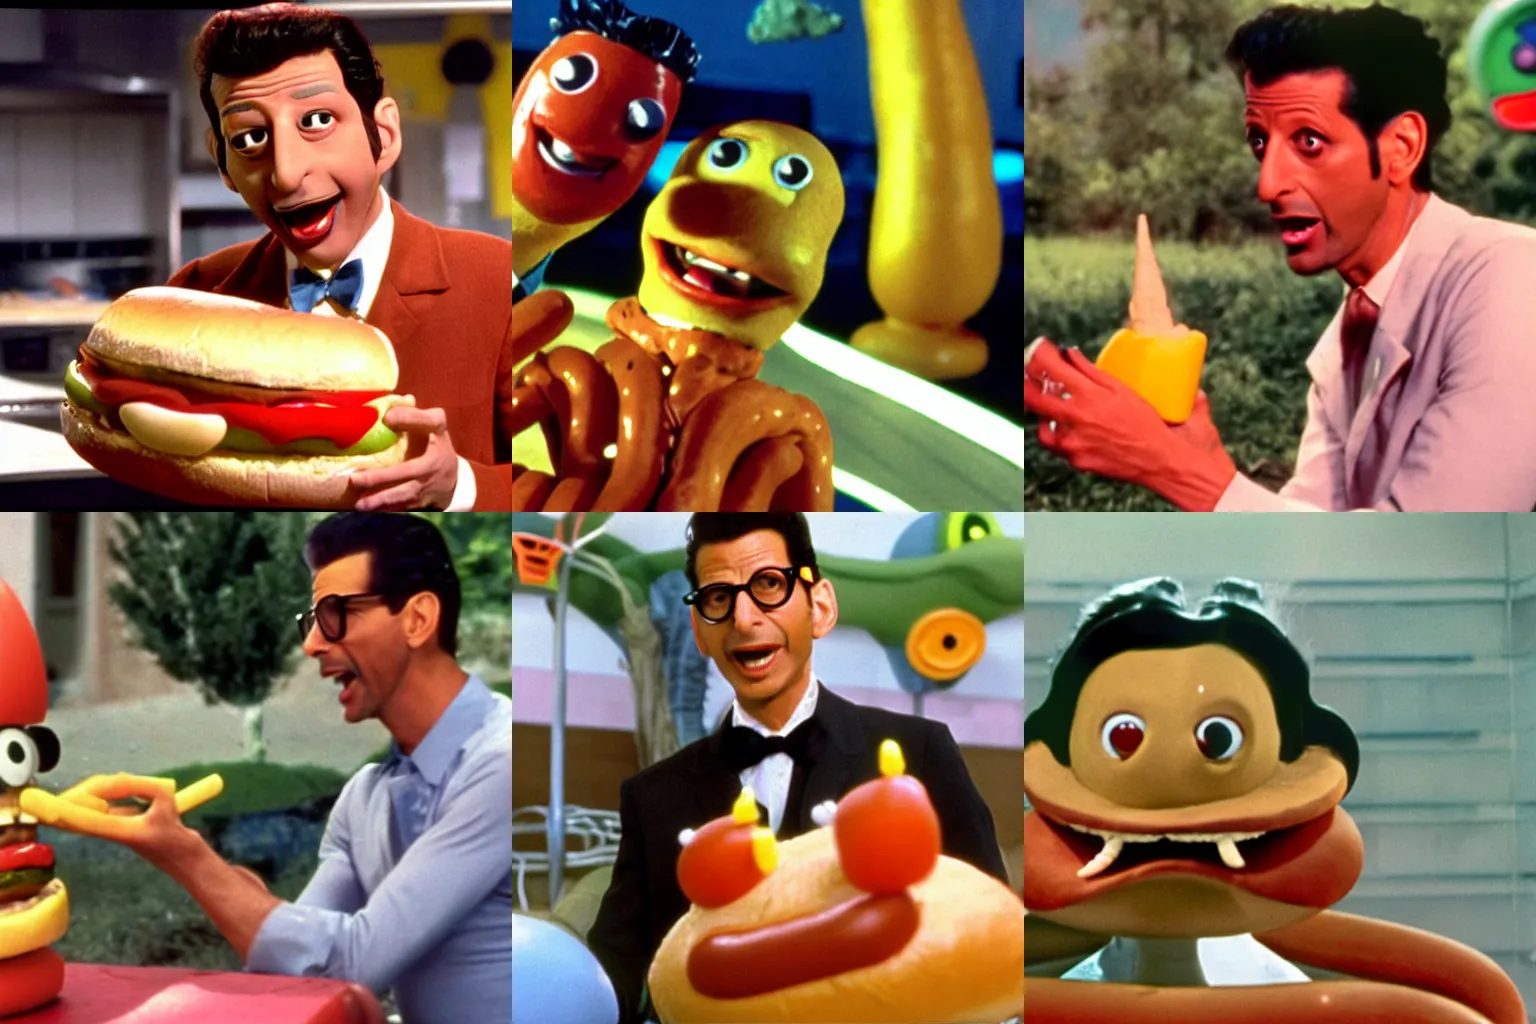 Prompt: Color movie still of Jeff Goldblum in 'Hot Dog monster vs Hamburger monster' by George Pal